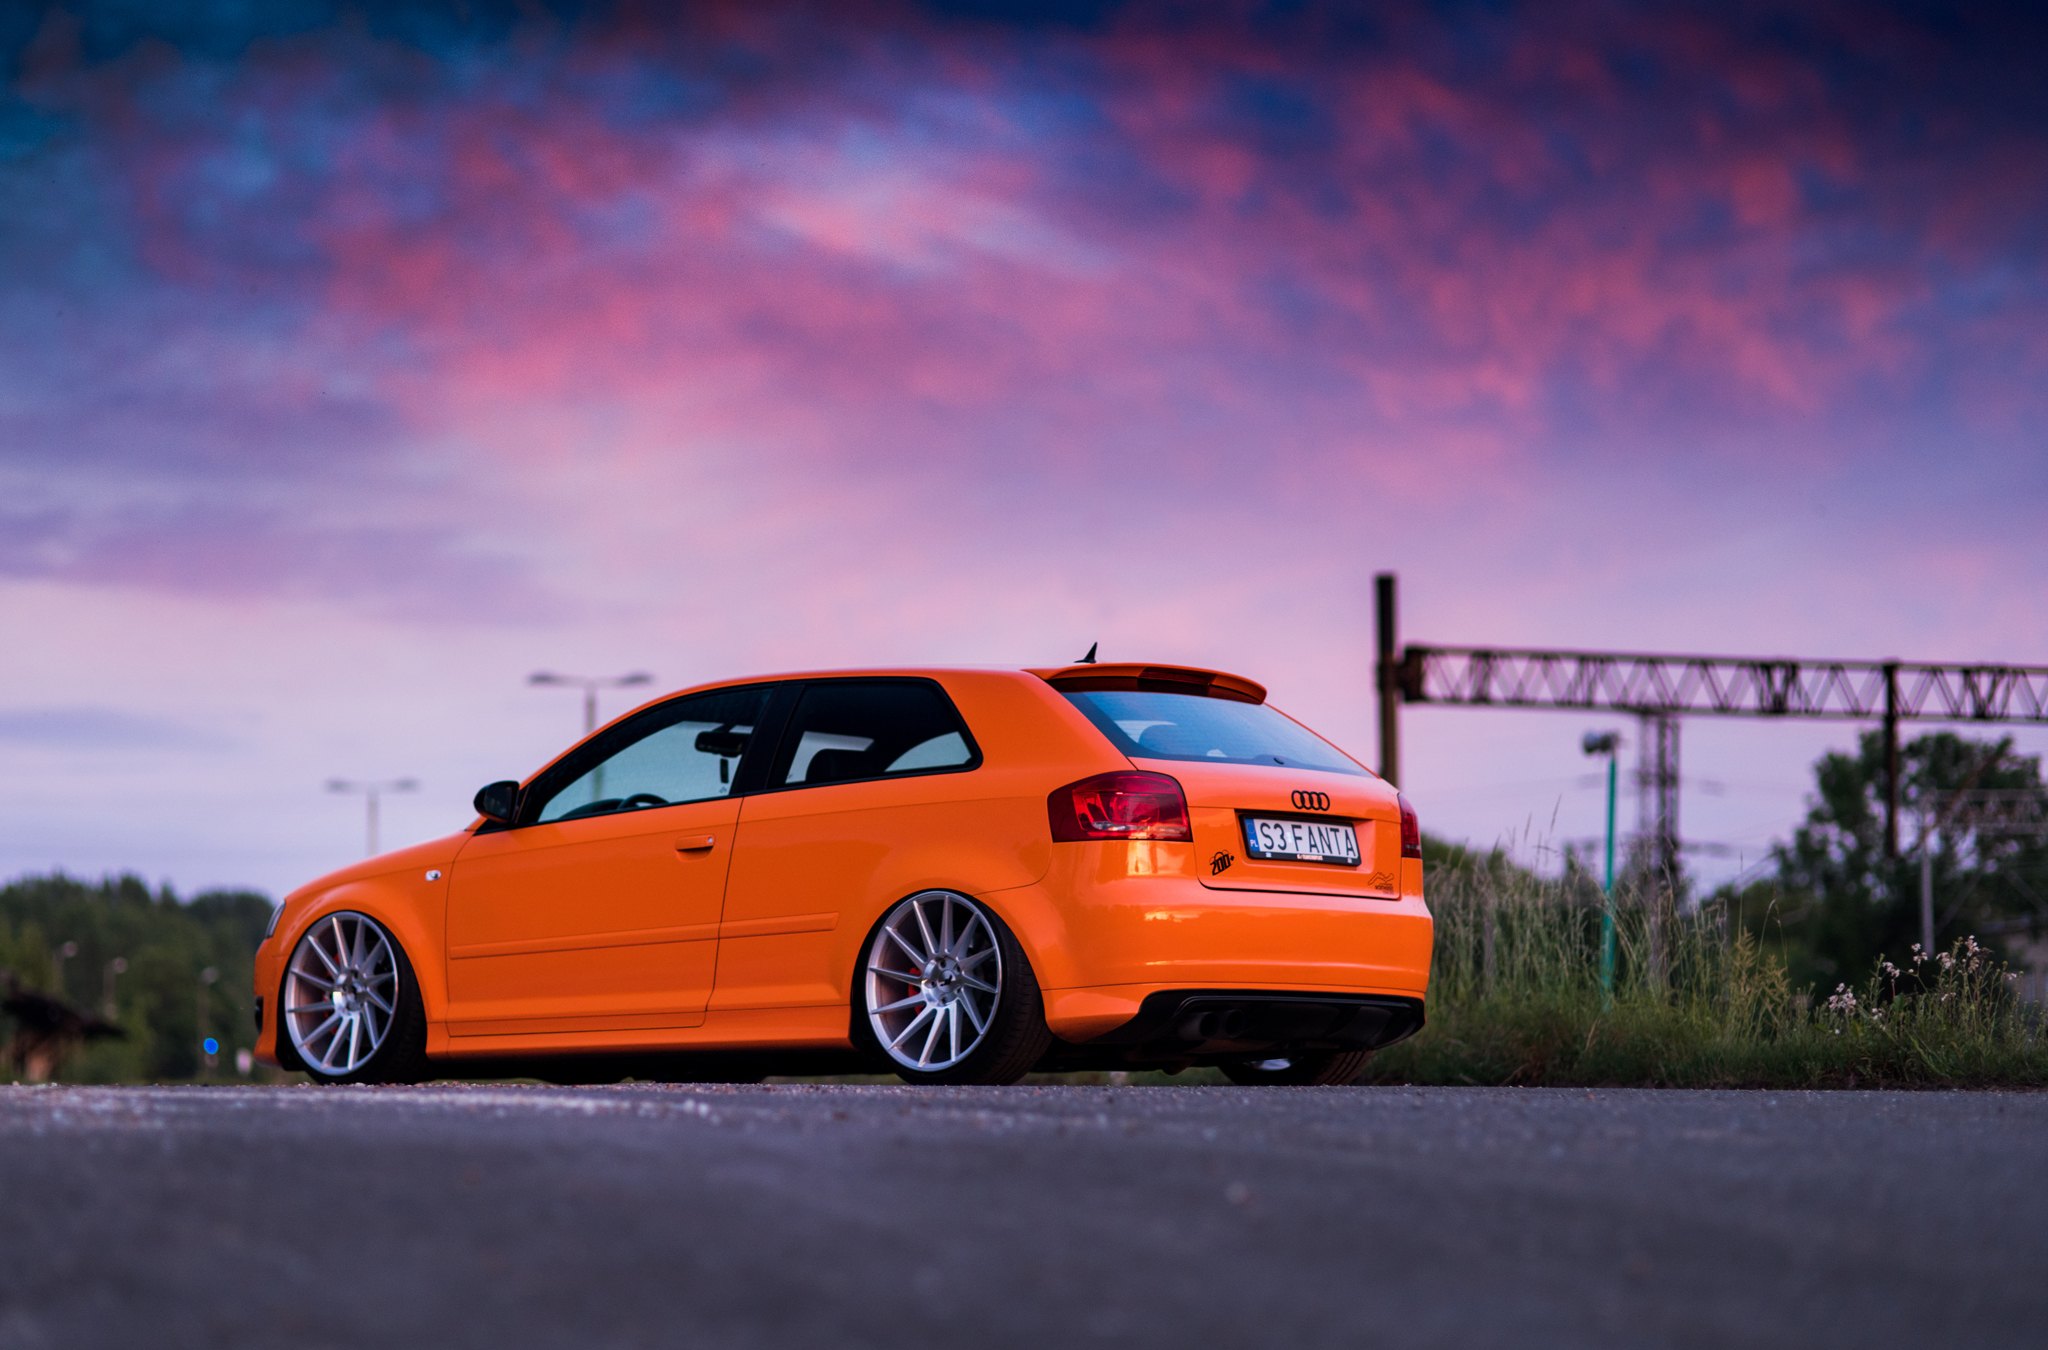 Aftermarket Rear Diffuser on Orange Audi S3 - Photo by JR Wheels